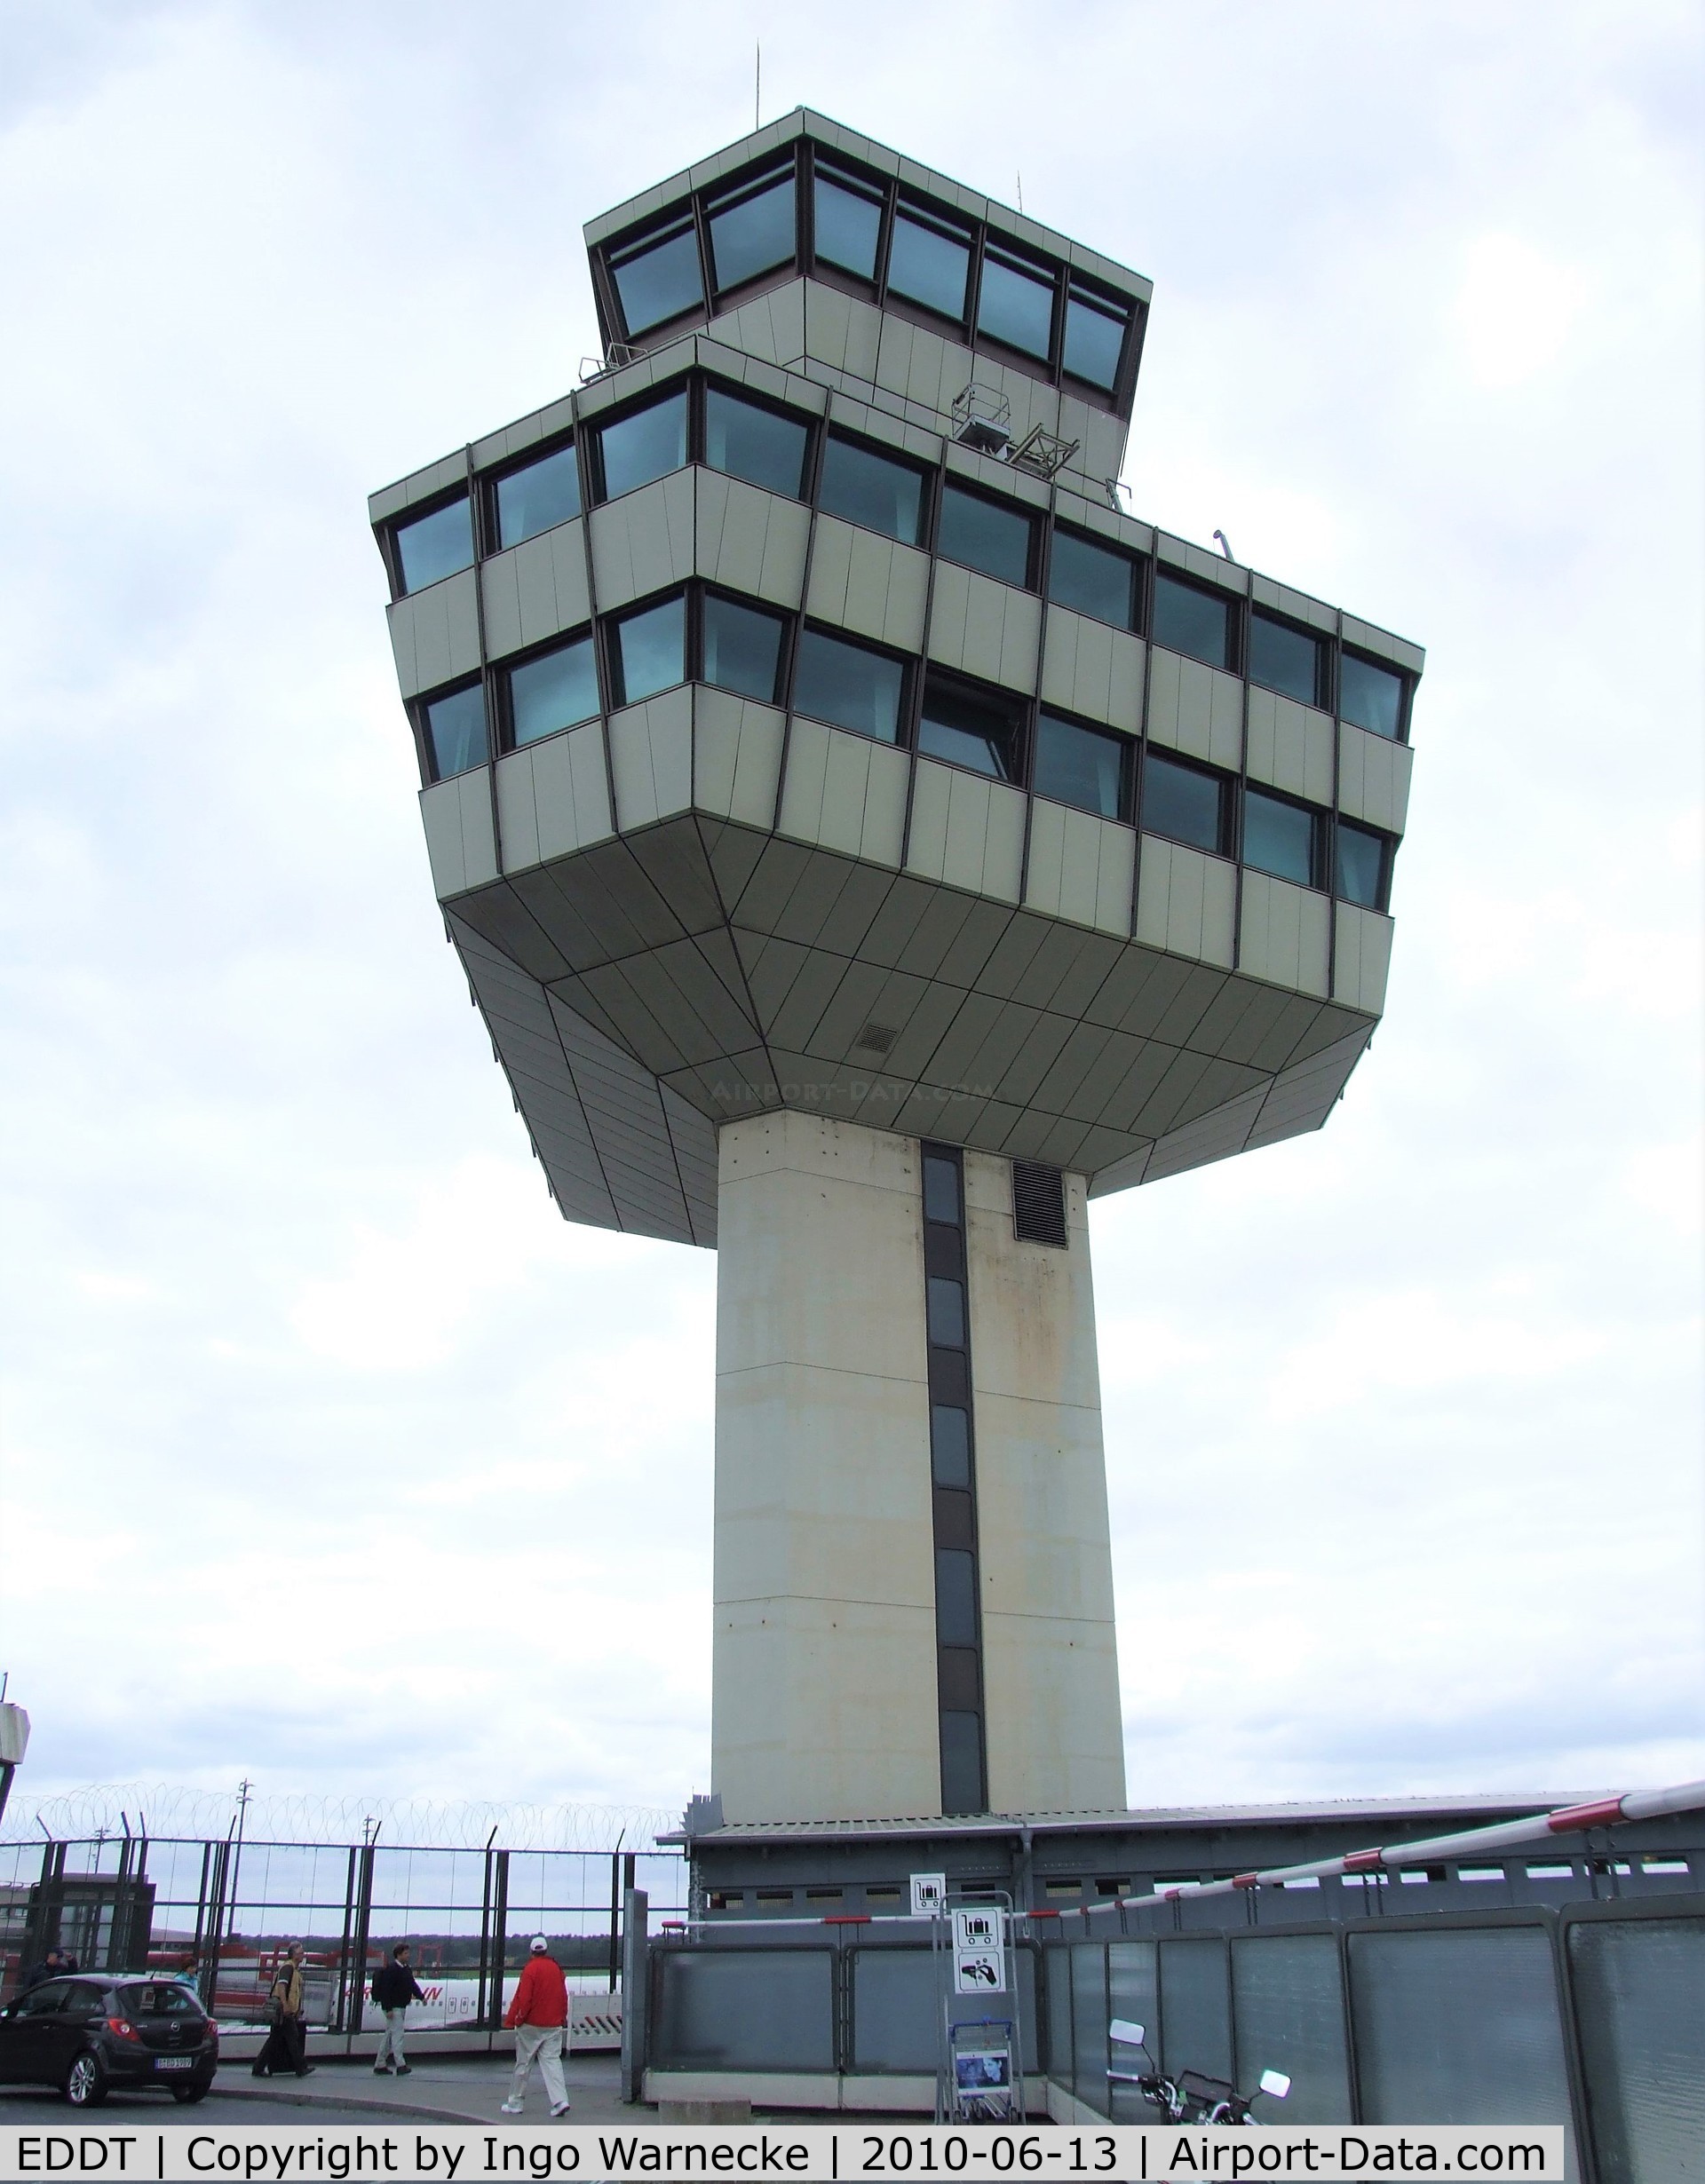 Tegel International Airport (closing in 2011), Berlin Germany (EDDT) - landside view of the tower at Berliin Tegel airport